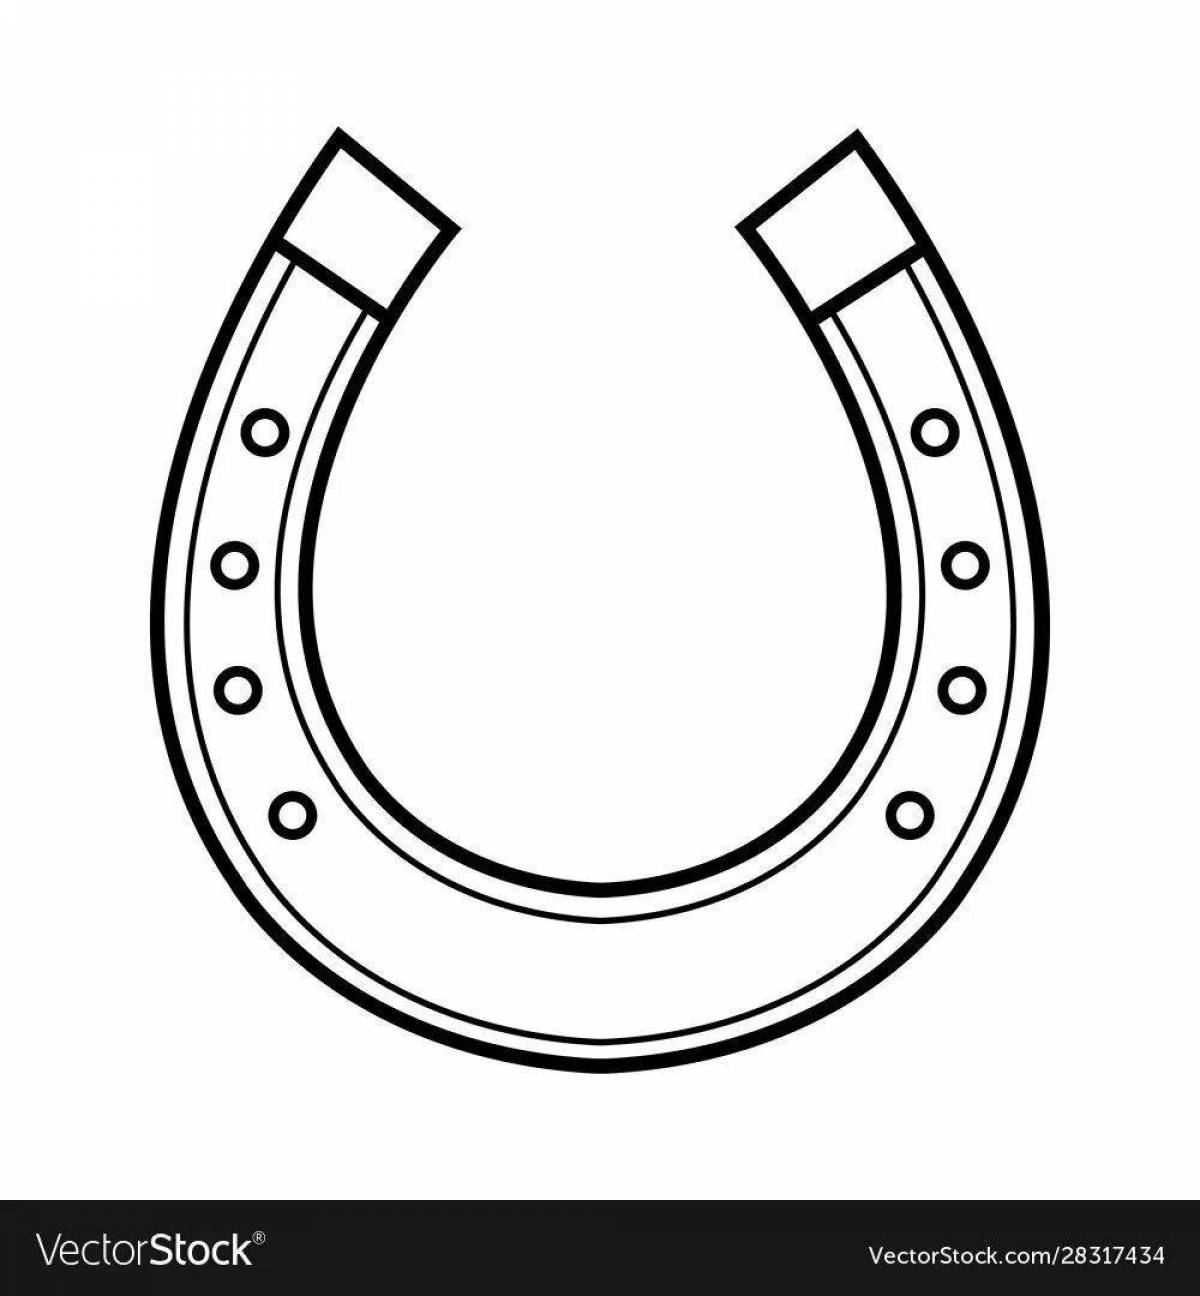 Happy horseshoe coloring for preschoolers